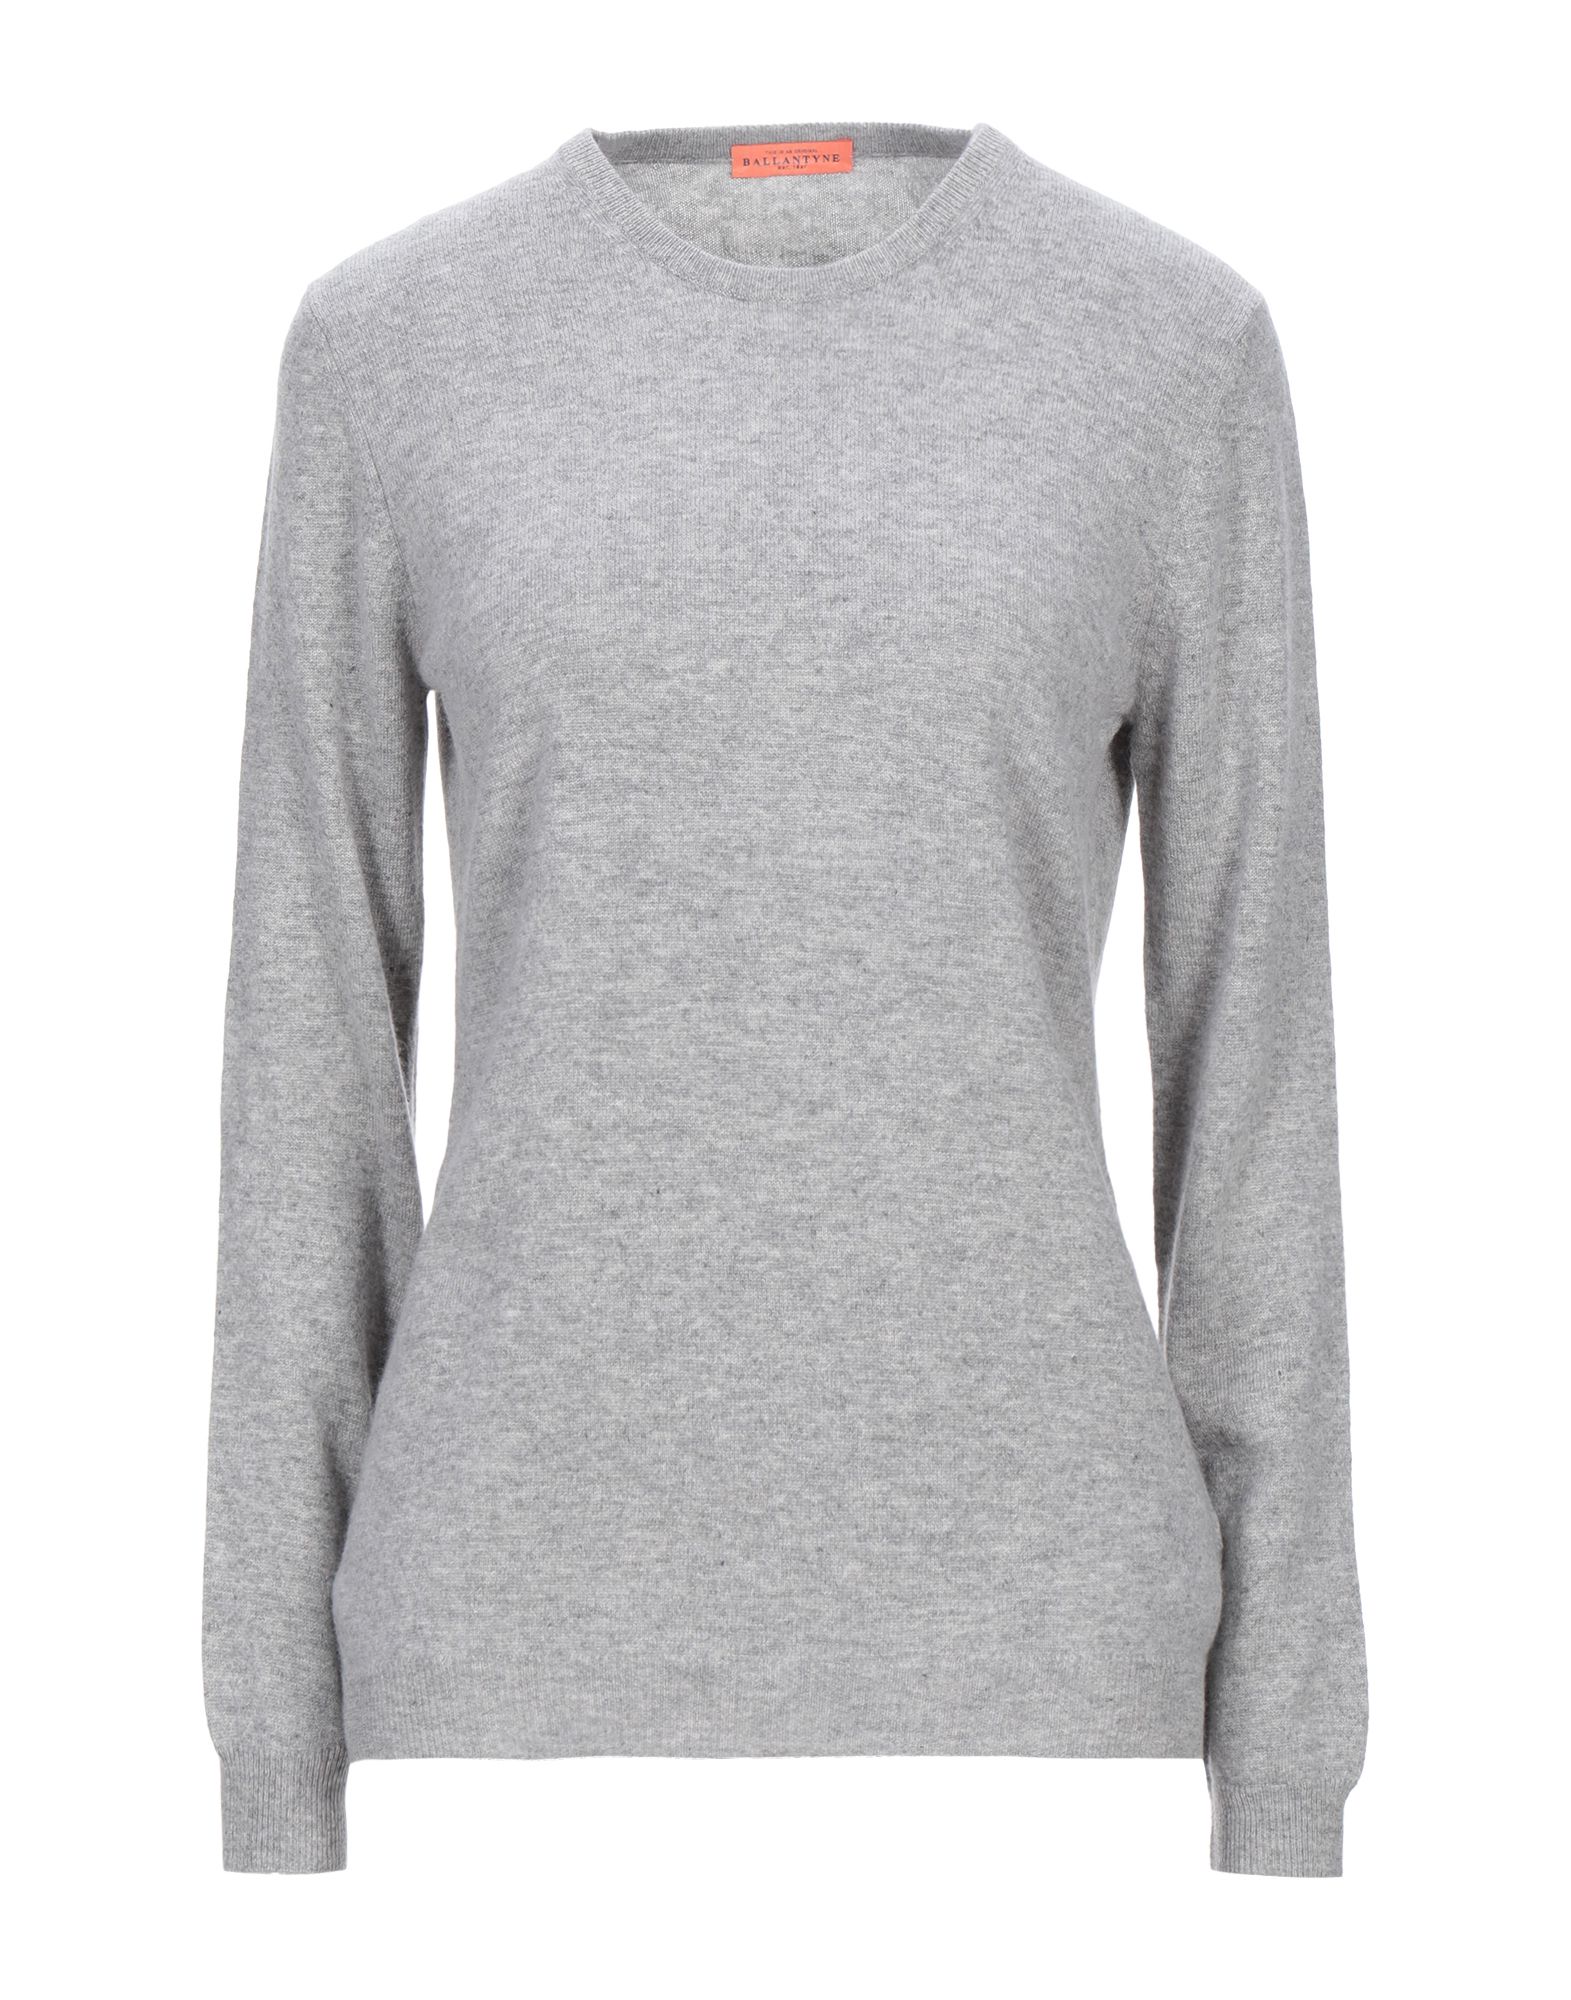 BALLANTYNE Sweaters - Item 39996060